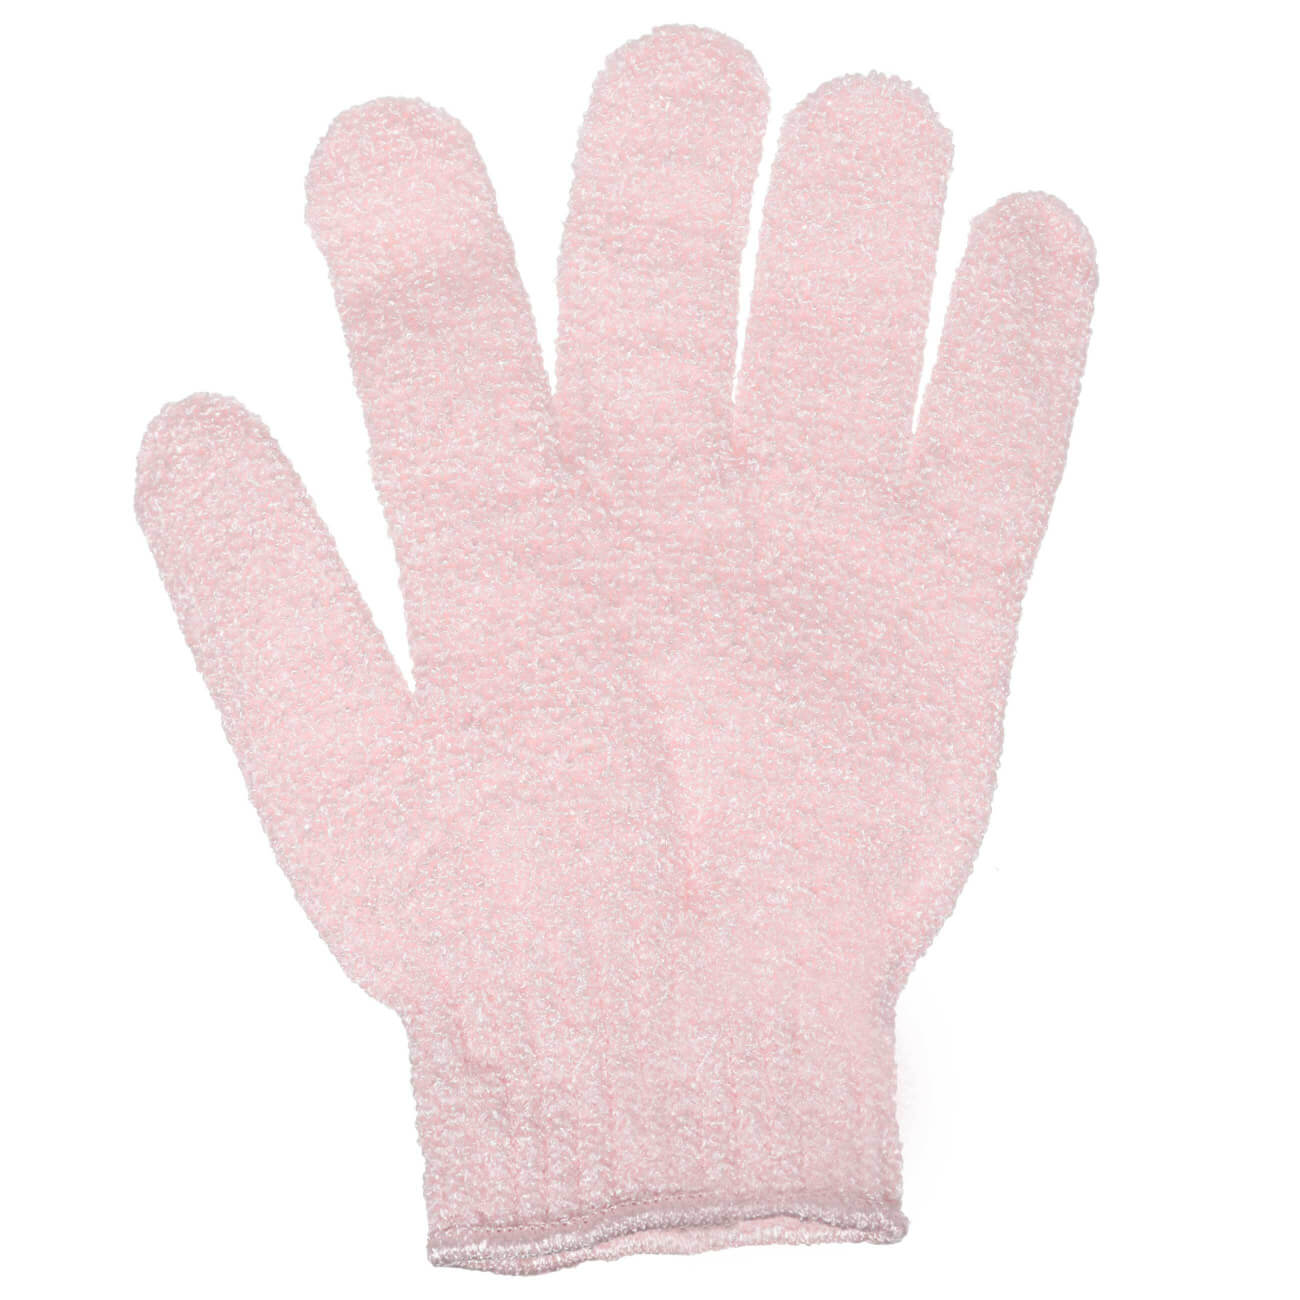 Перчатка для мытья тела, 20 см, 2 шт, отшелушивающая, нейлон, пудровая, Glamor пудровая пленка